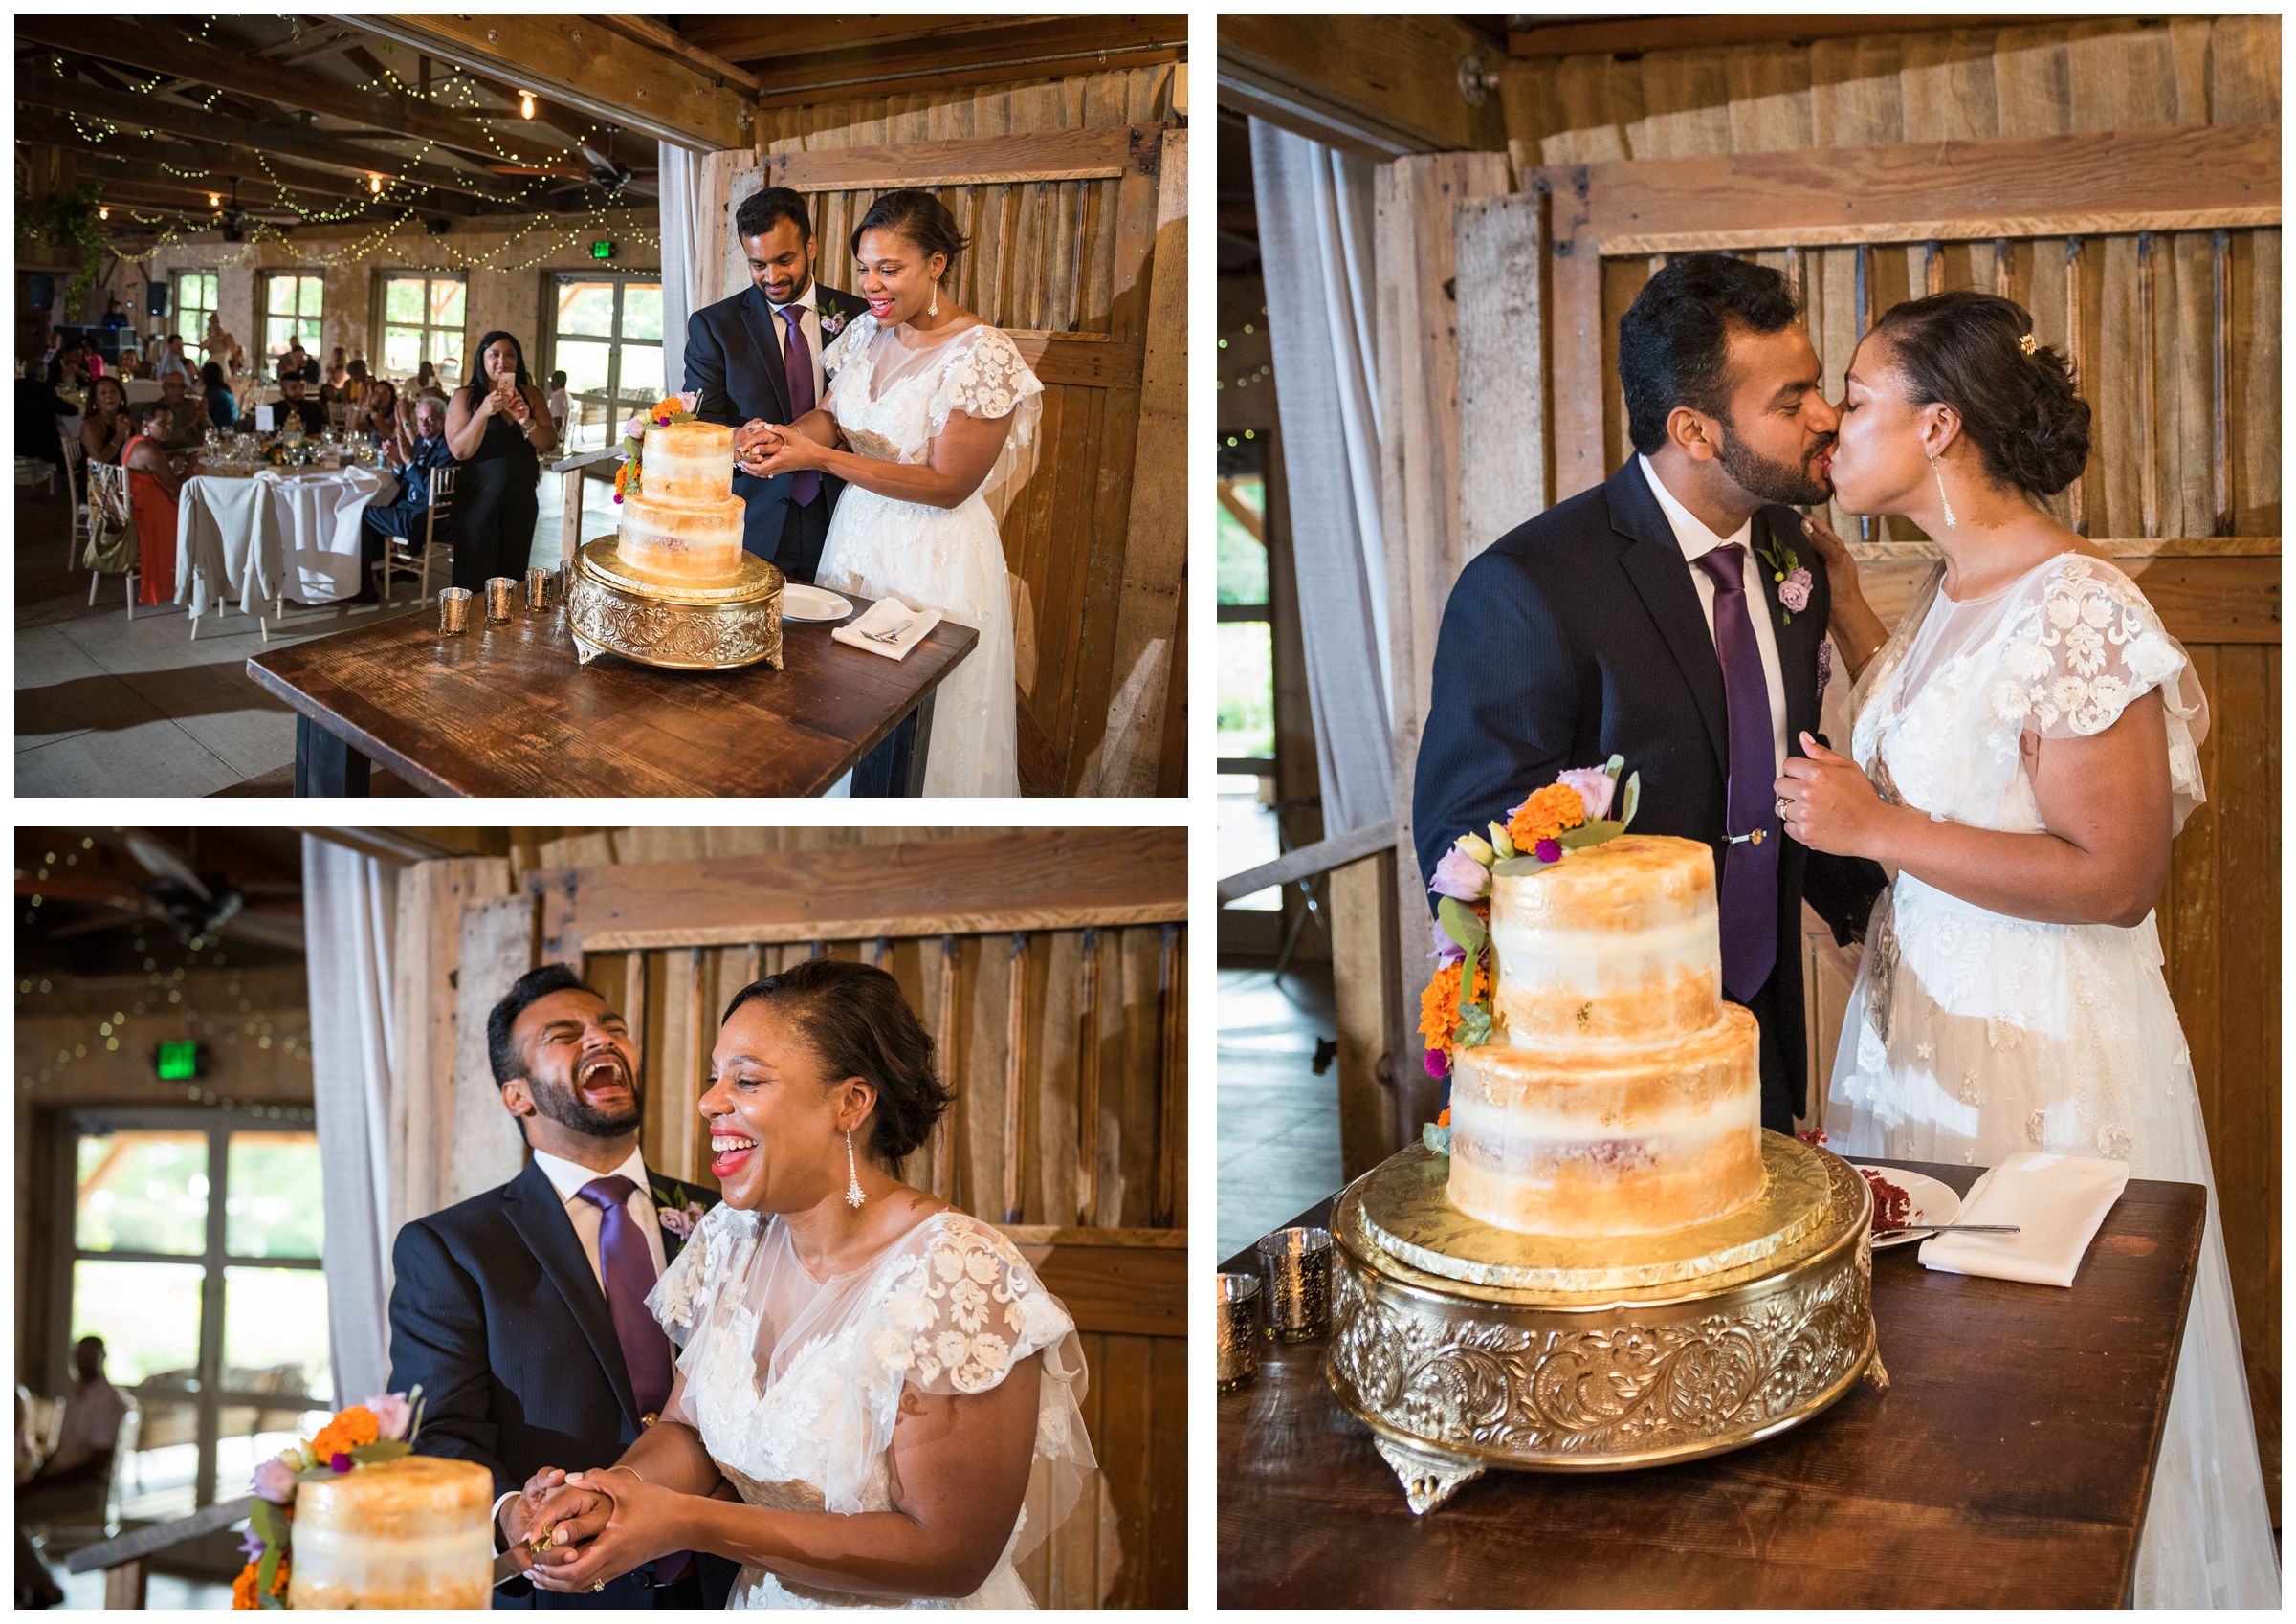 bride and groom cutting cake at Jorgensen Farms historic barn wedding reception